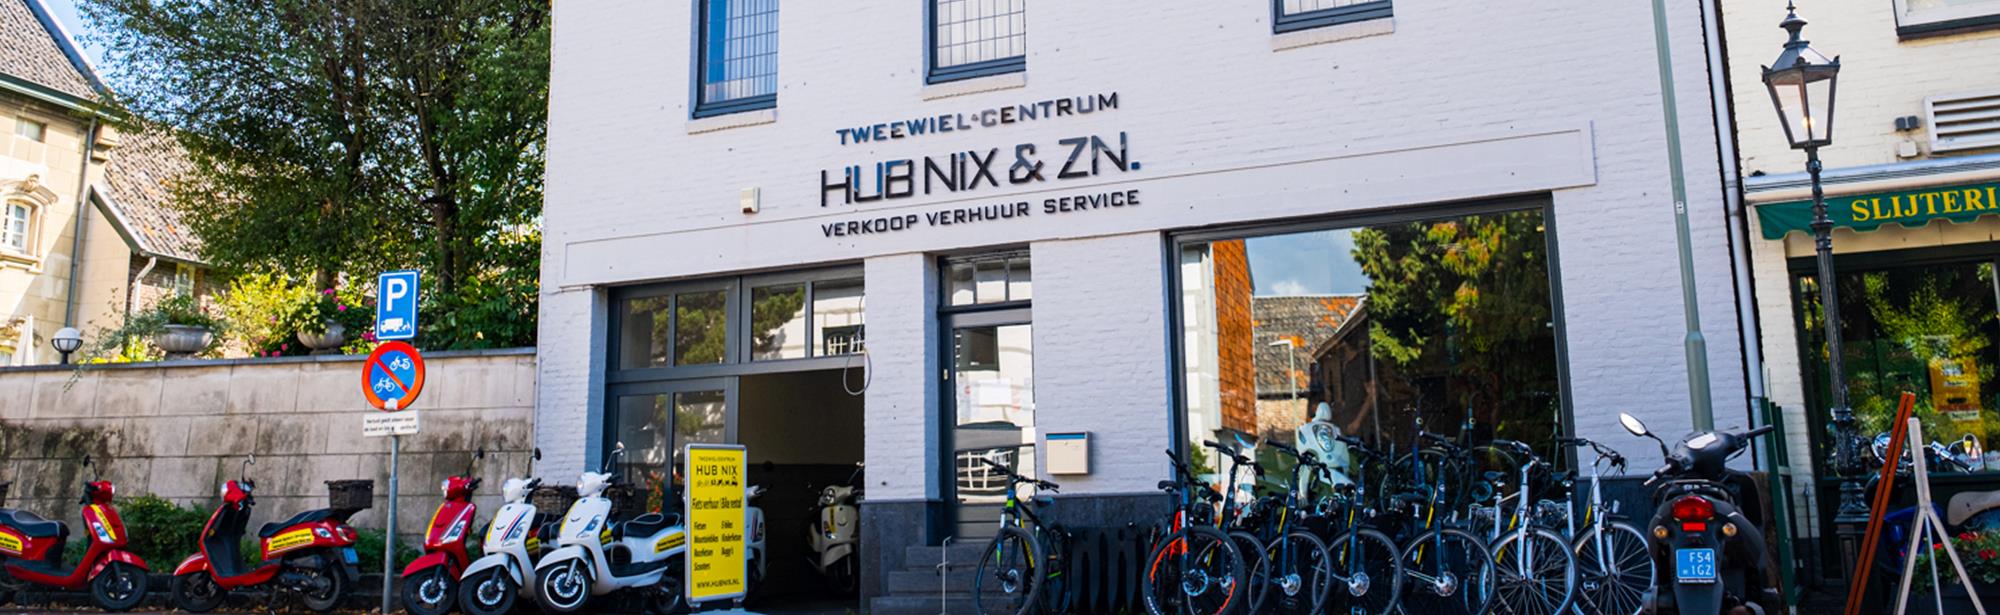 Tweewiel-Centrum Hub Nix & Zn.